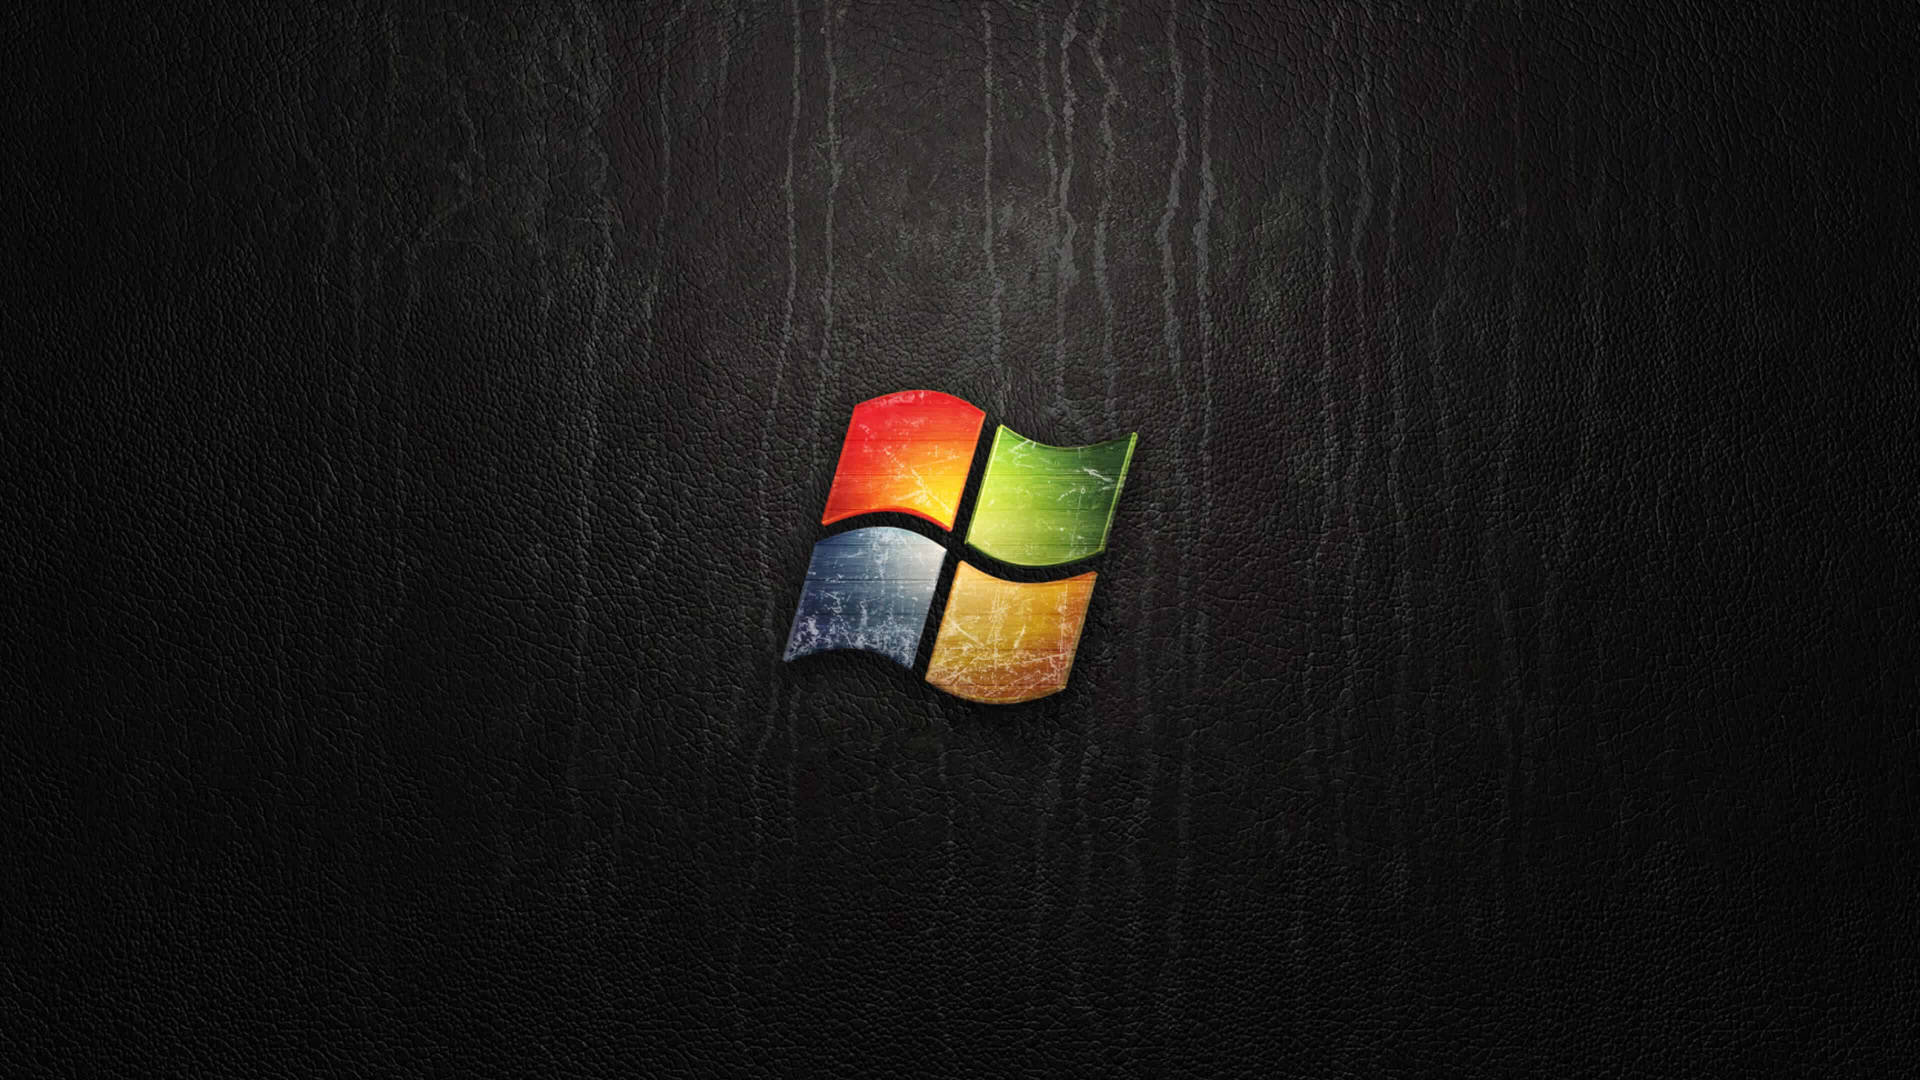  Microsoft Bing Hintergrundbild 1920x1080. Bing Wallpaper